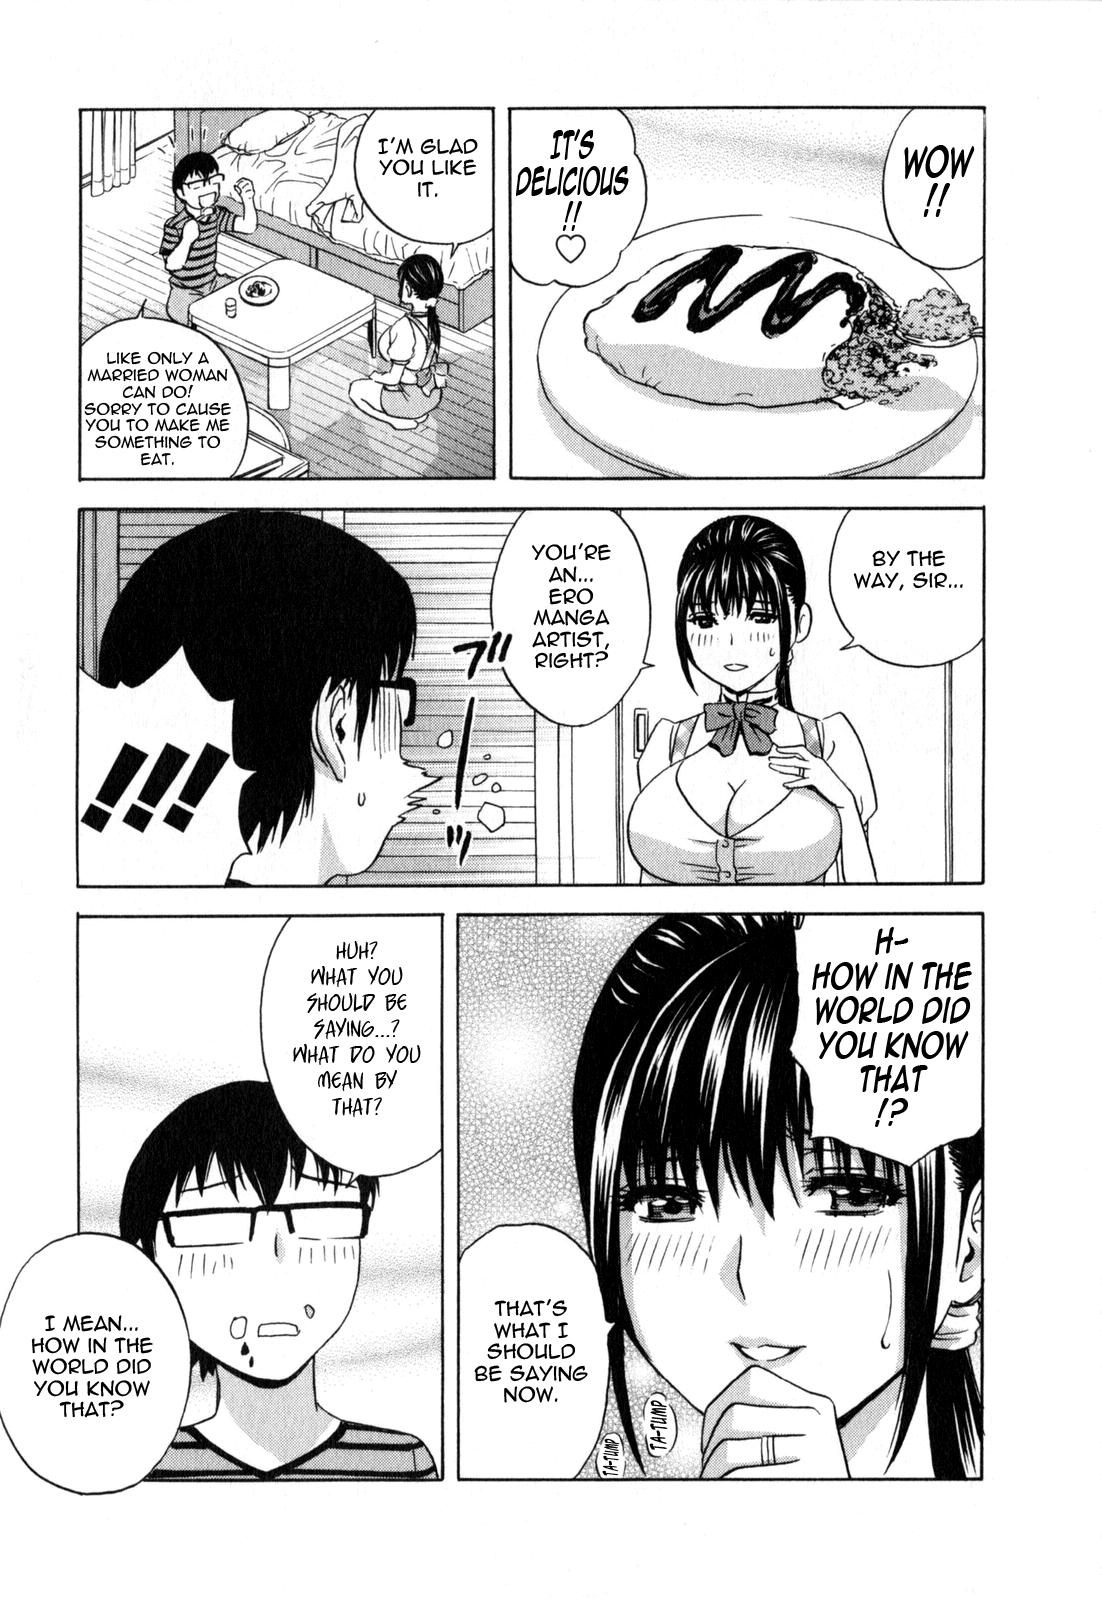 [Hidemaru] Life with Married Women Just Like a Manga 2 - Ch. 1-7 [English] {Tadanohito} 114